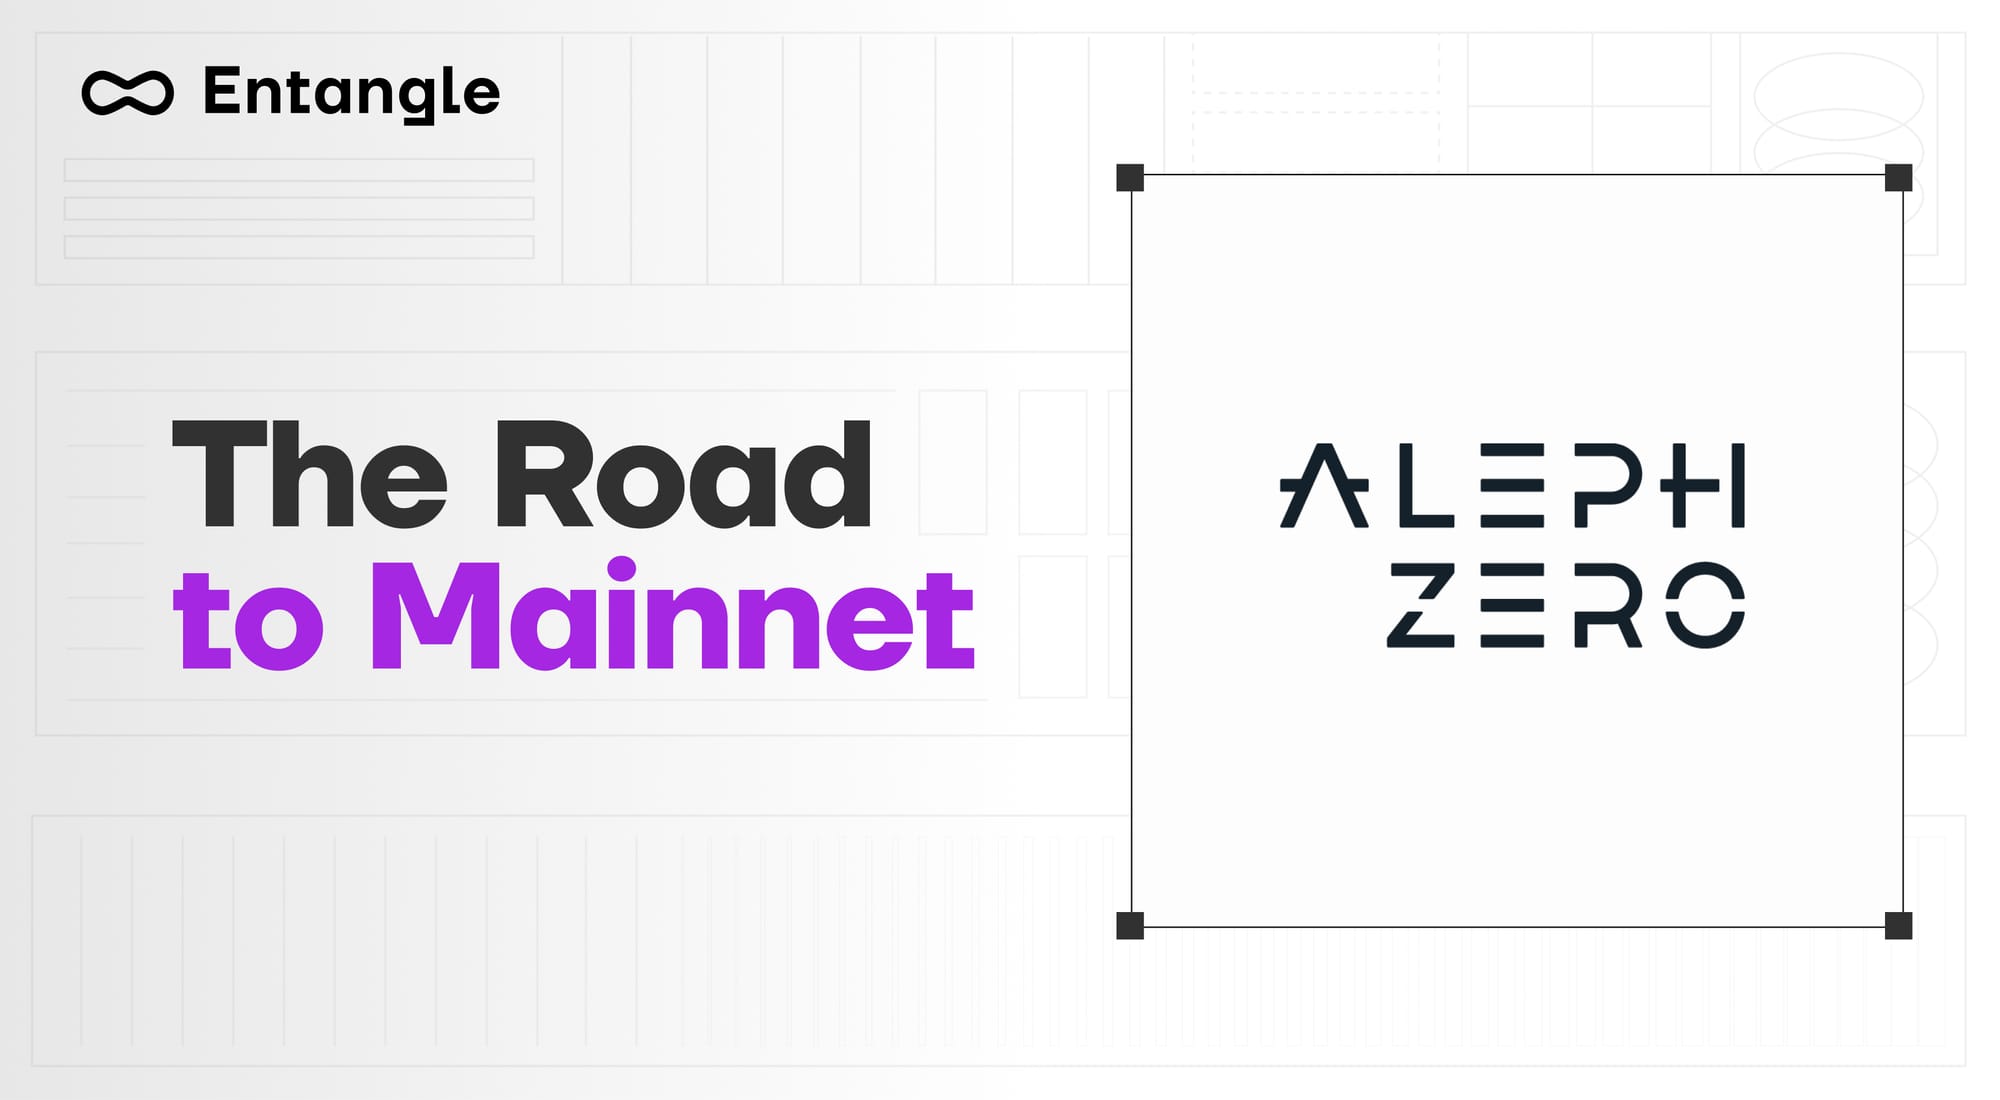 Road to Mainnet: Aleph Zero